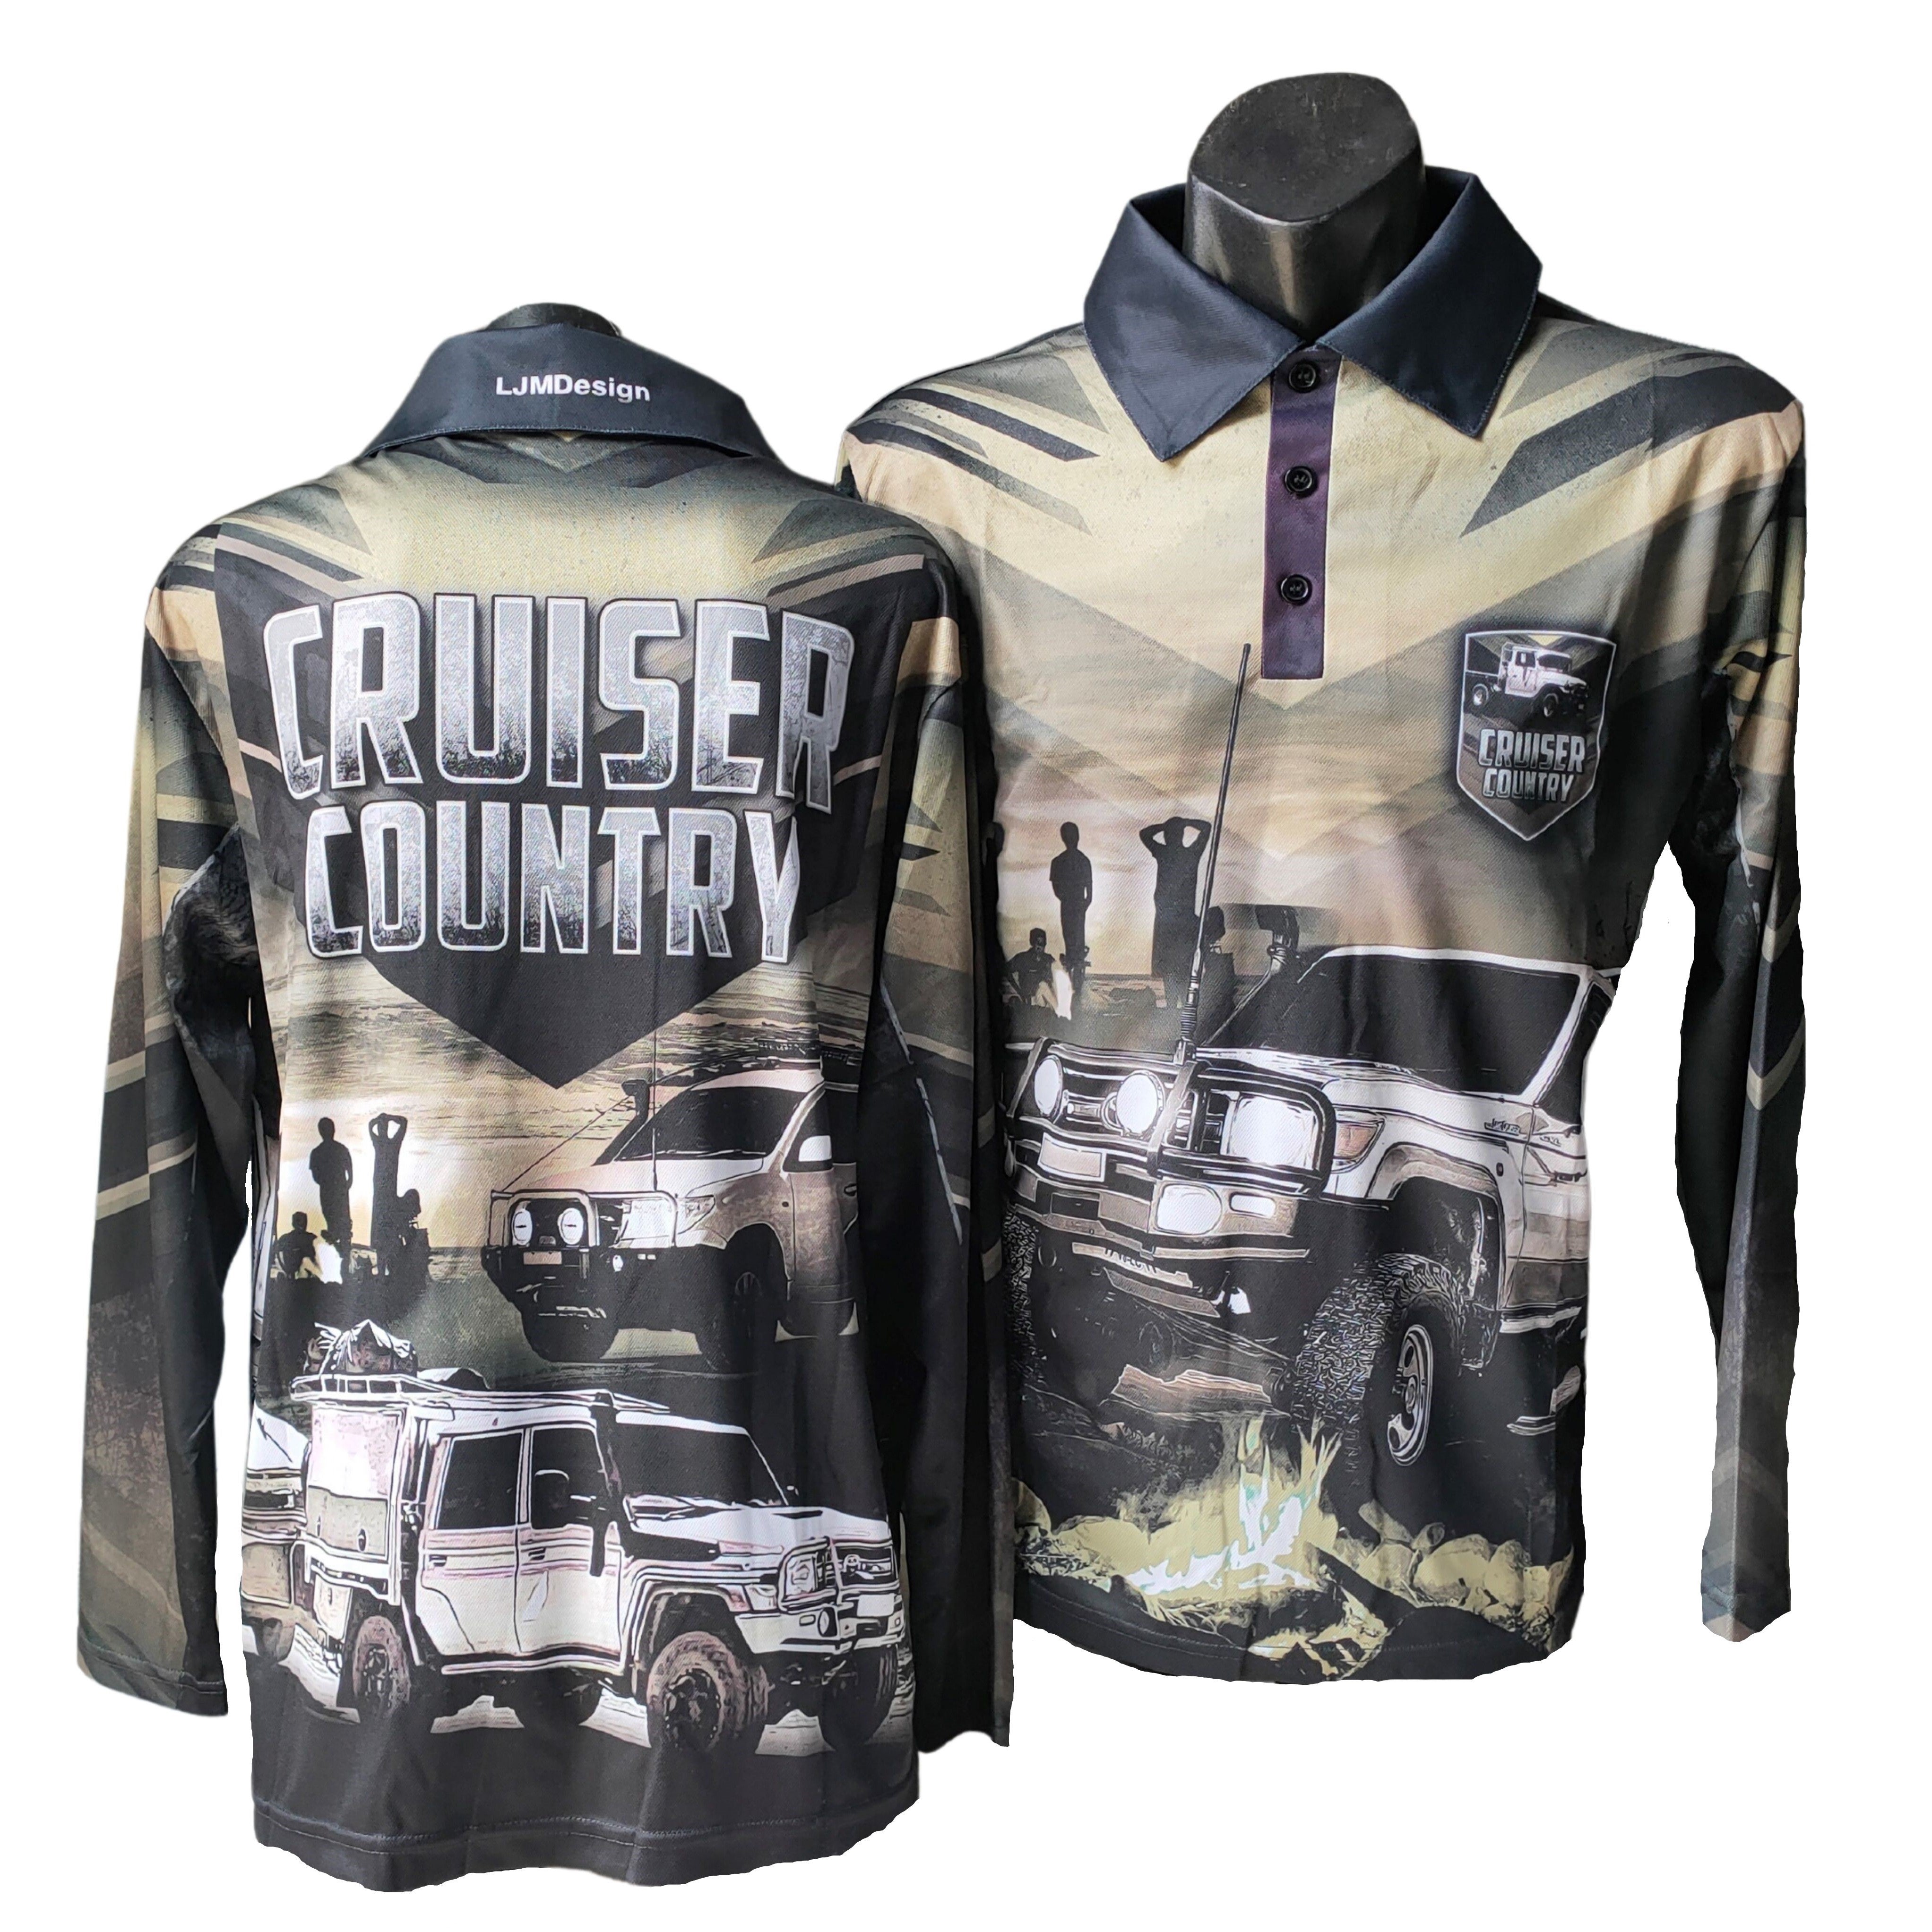 Cruiser Country Sandy Taupe – Fishing Shirt by LJMDesign